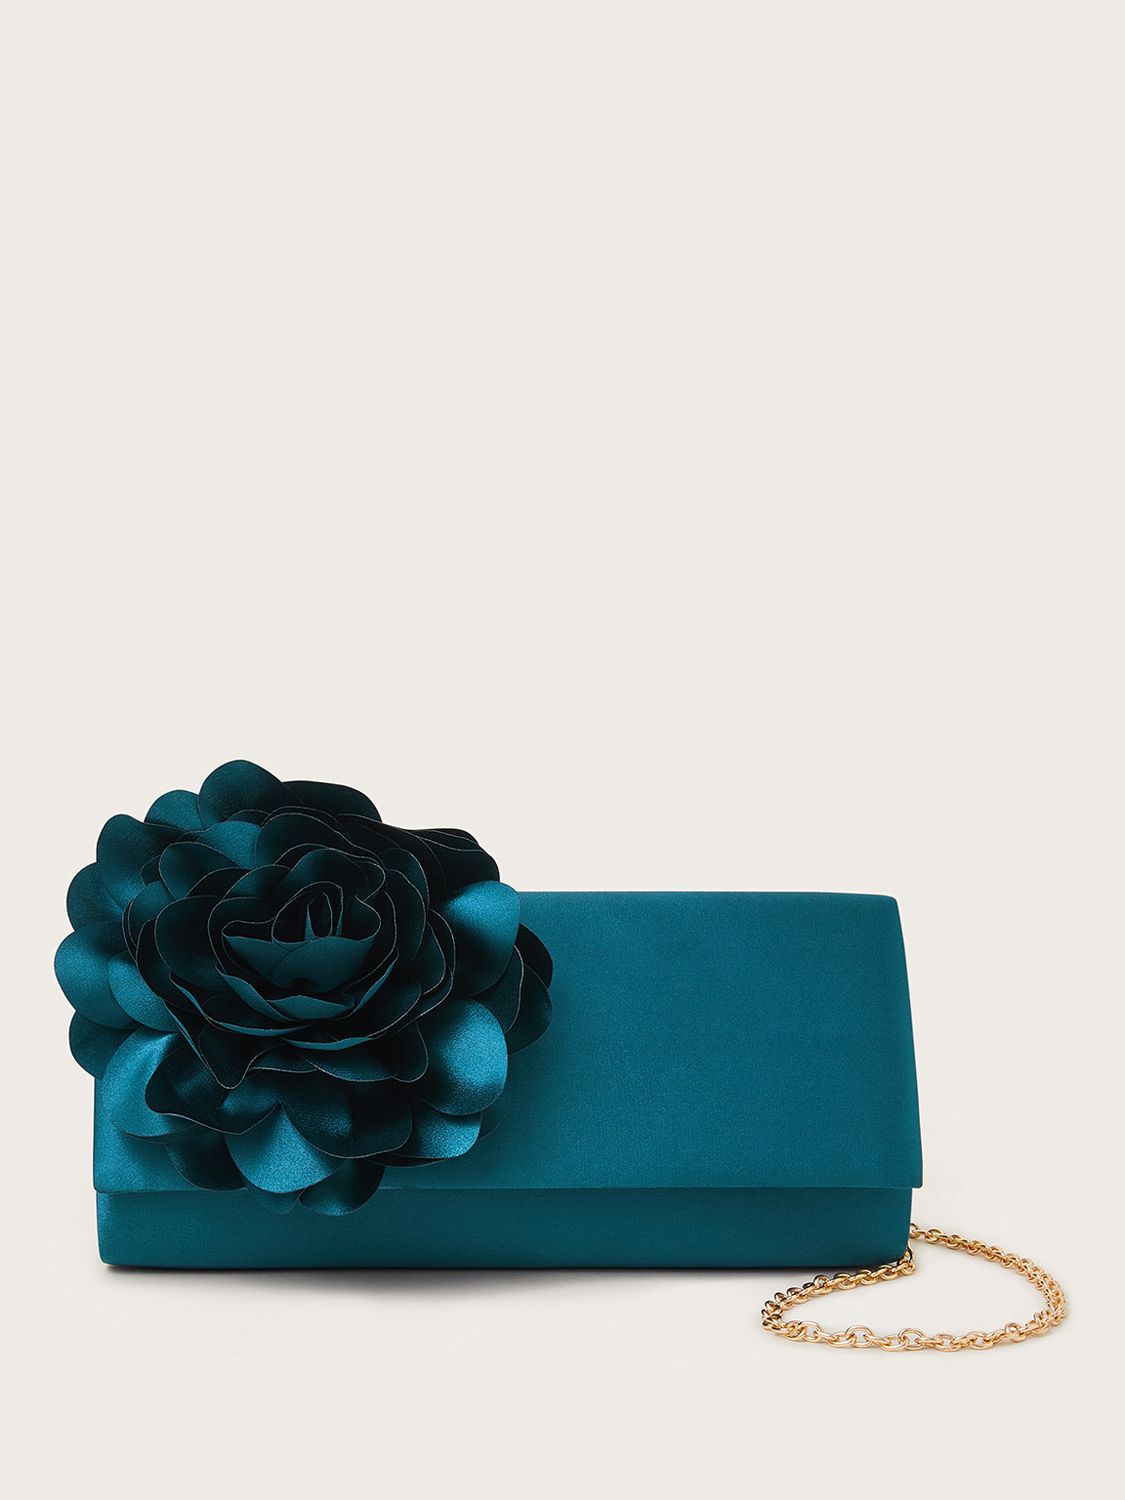 Monsoon Petal Flower Corsage Bag, Blue, One Size